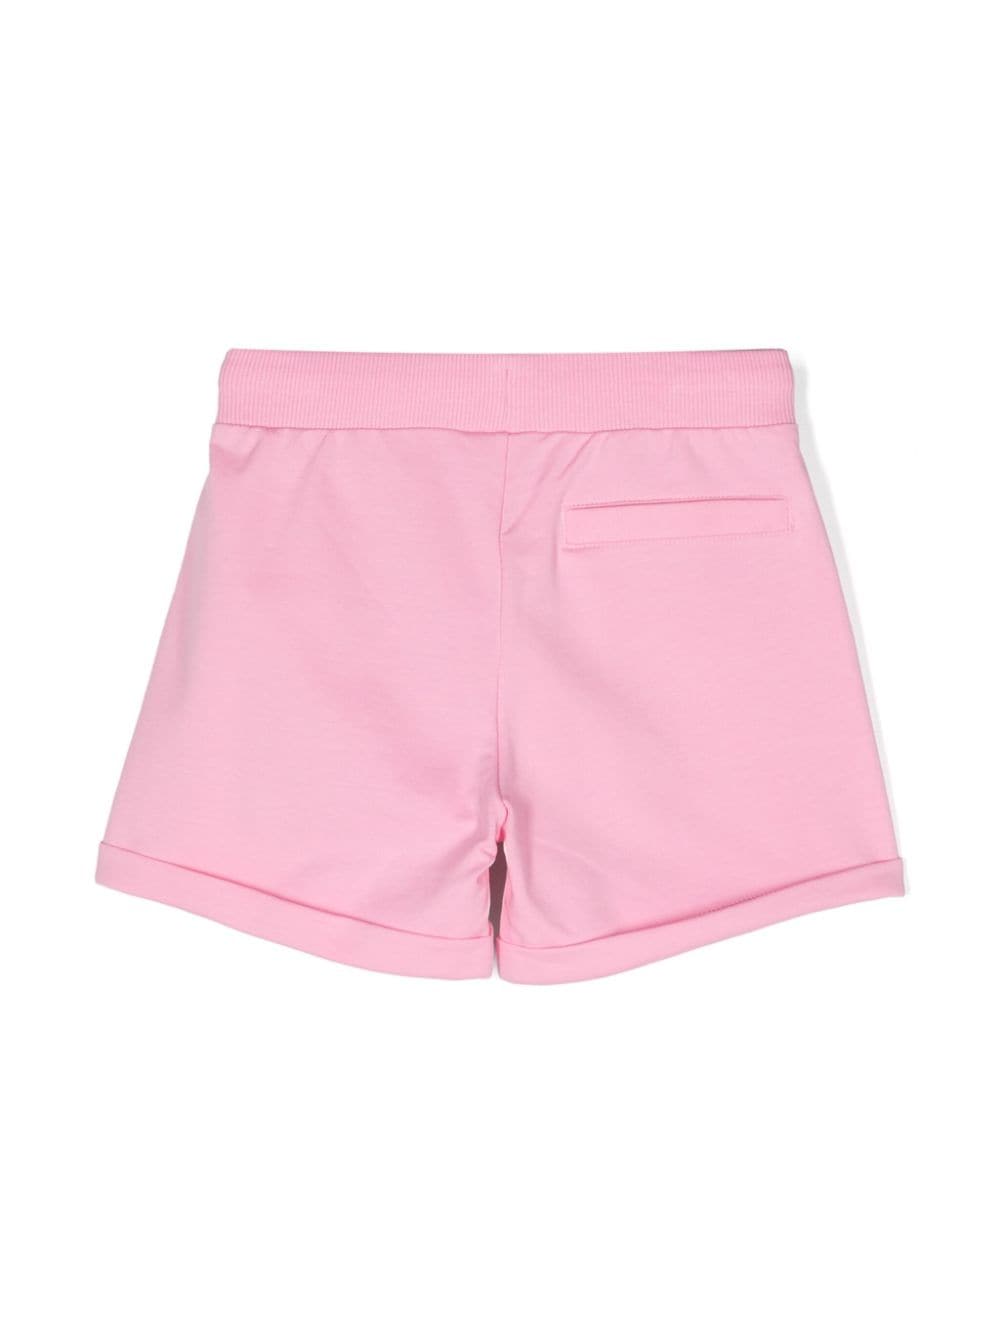 Shorts bambina rosa/multicolore